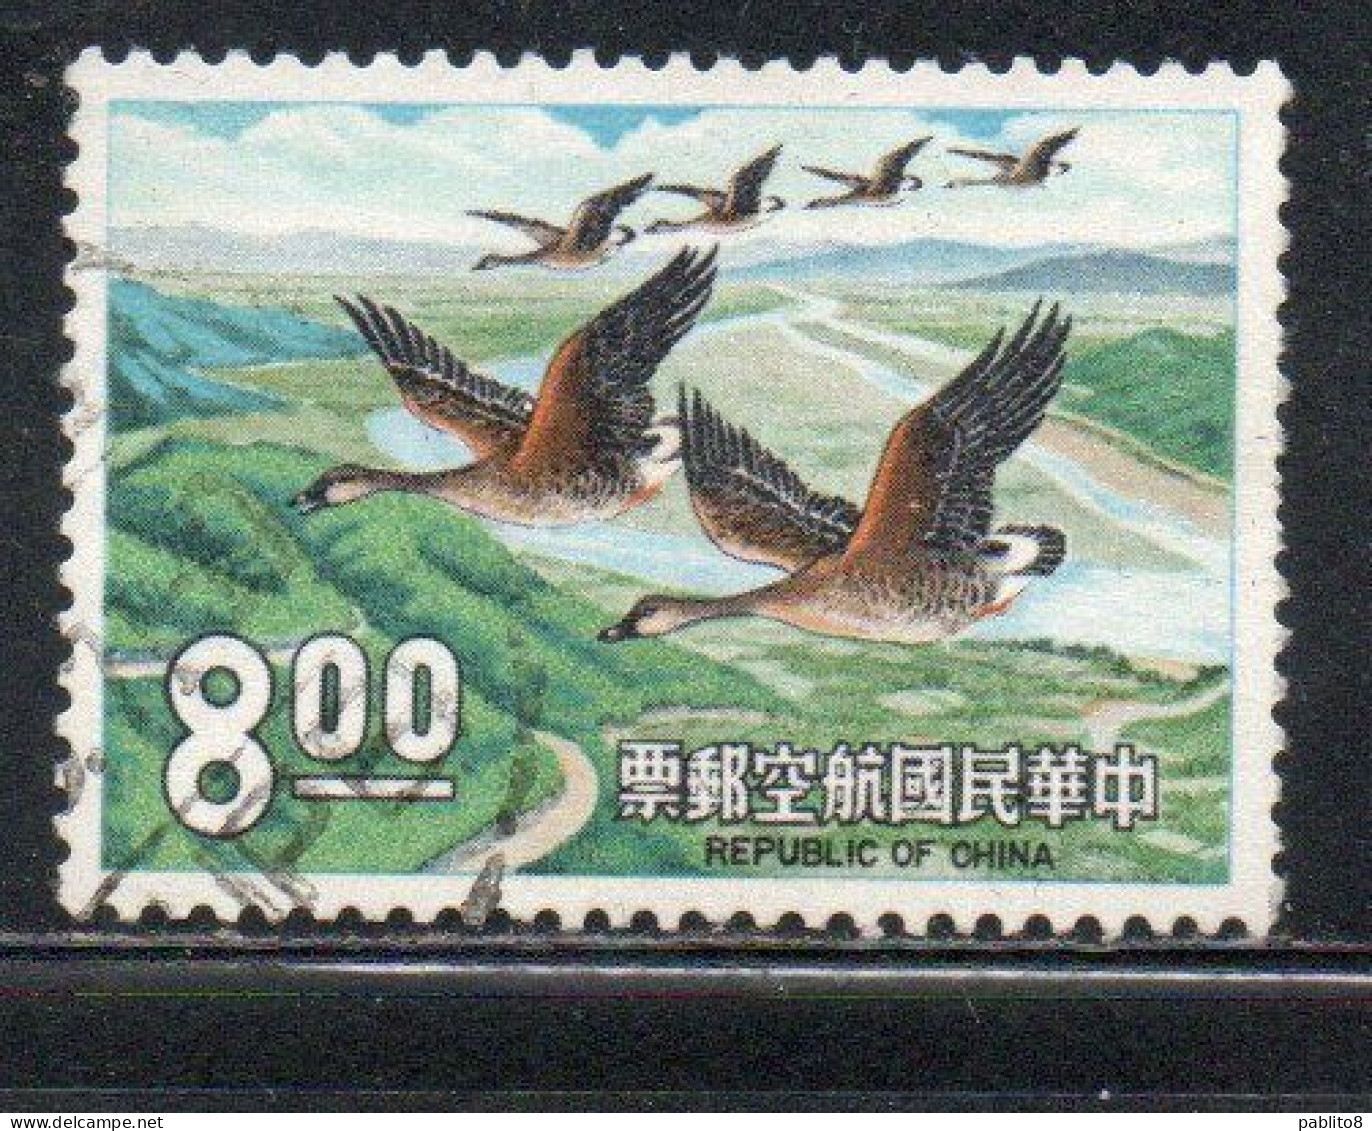 CHINA REPUBLIC CINA TAIWAN FORMOSA 1969 AIR POST MAIL AIRMAIL BIRD FAUNA BIRDS WILD GEESE FLIGT LAND 8$ USED USATO - Posta Aerea